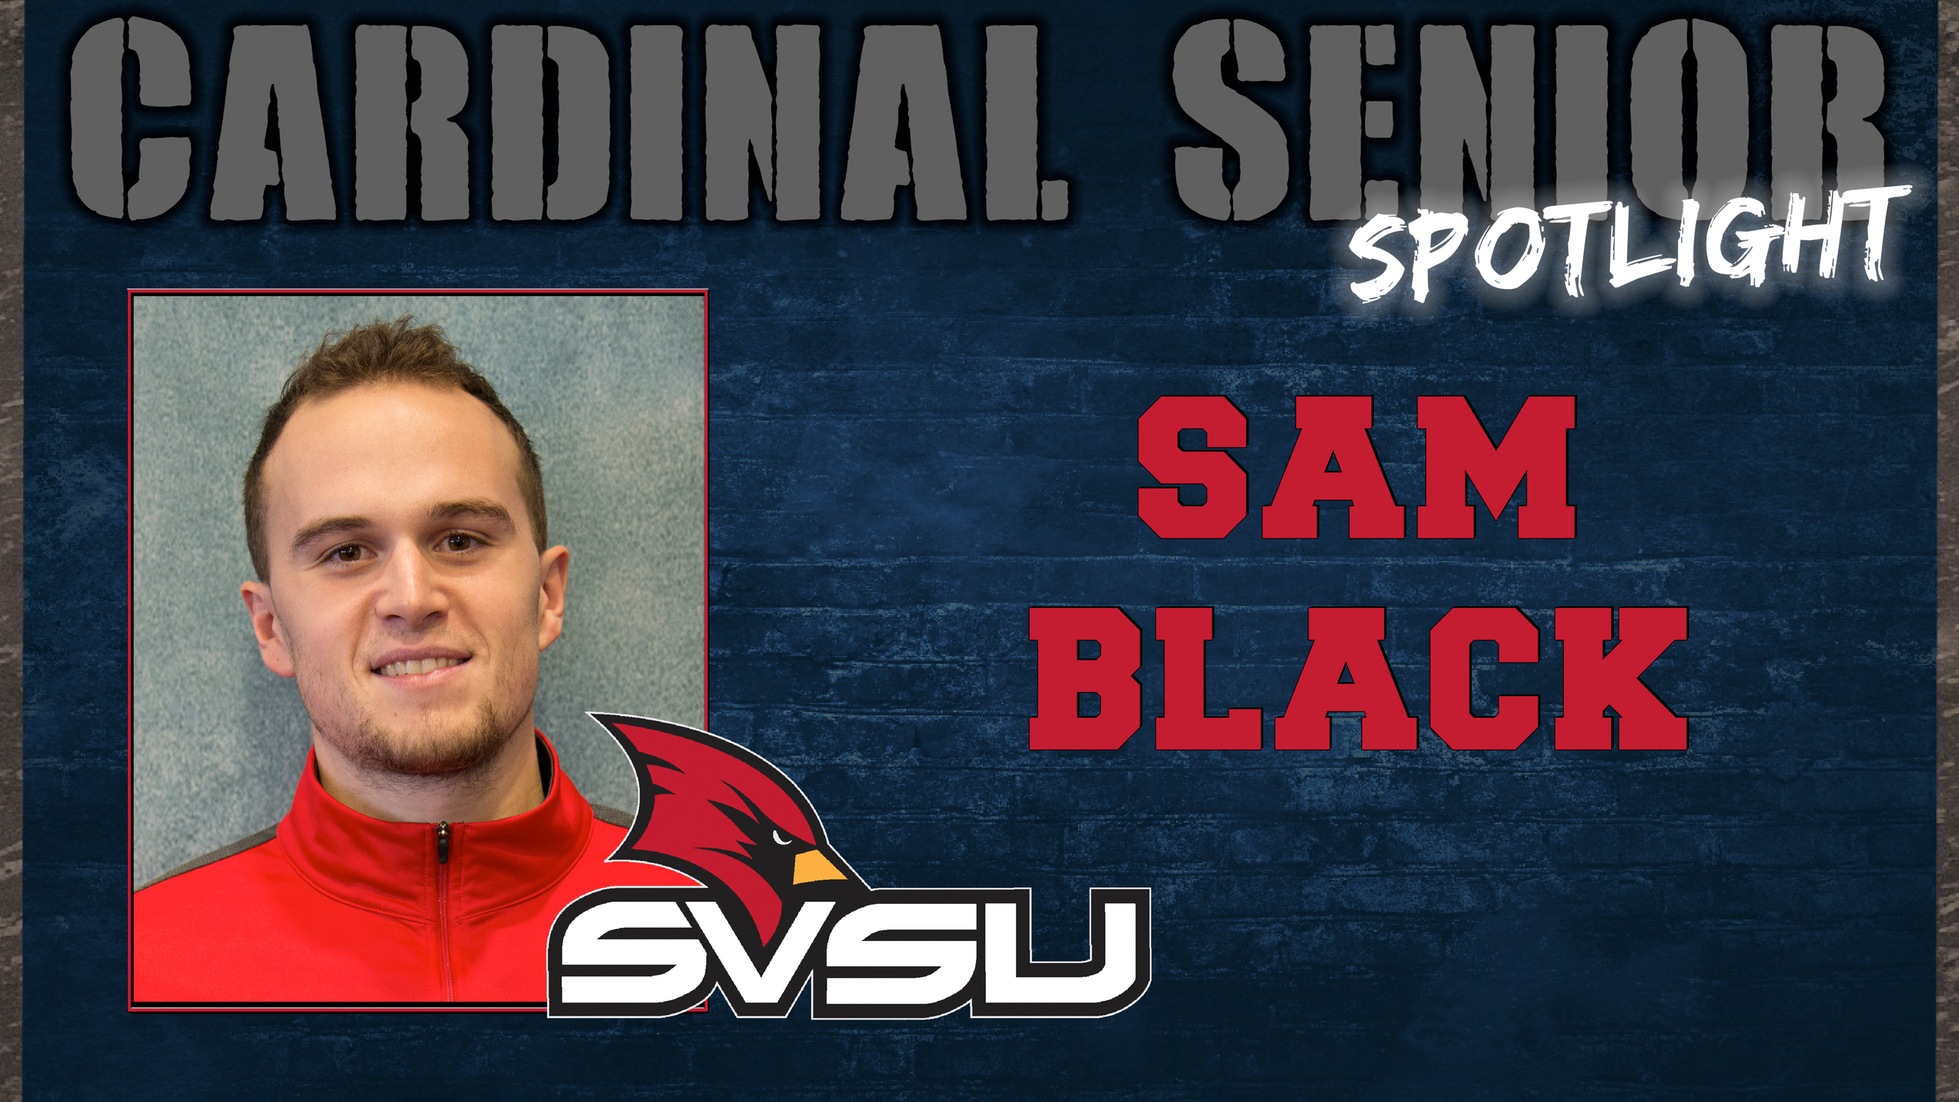 SVSU Cardinal Senior Spotlight - Sam Black